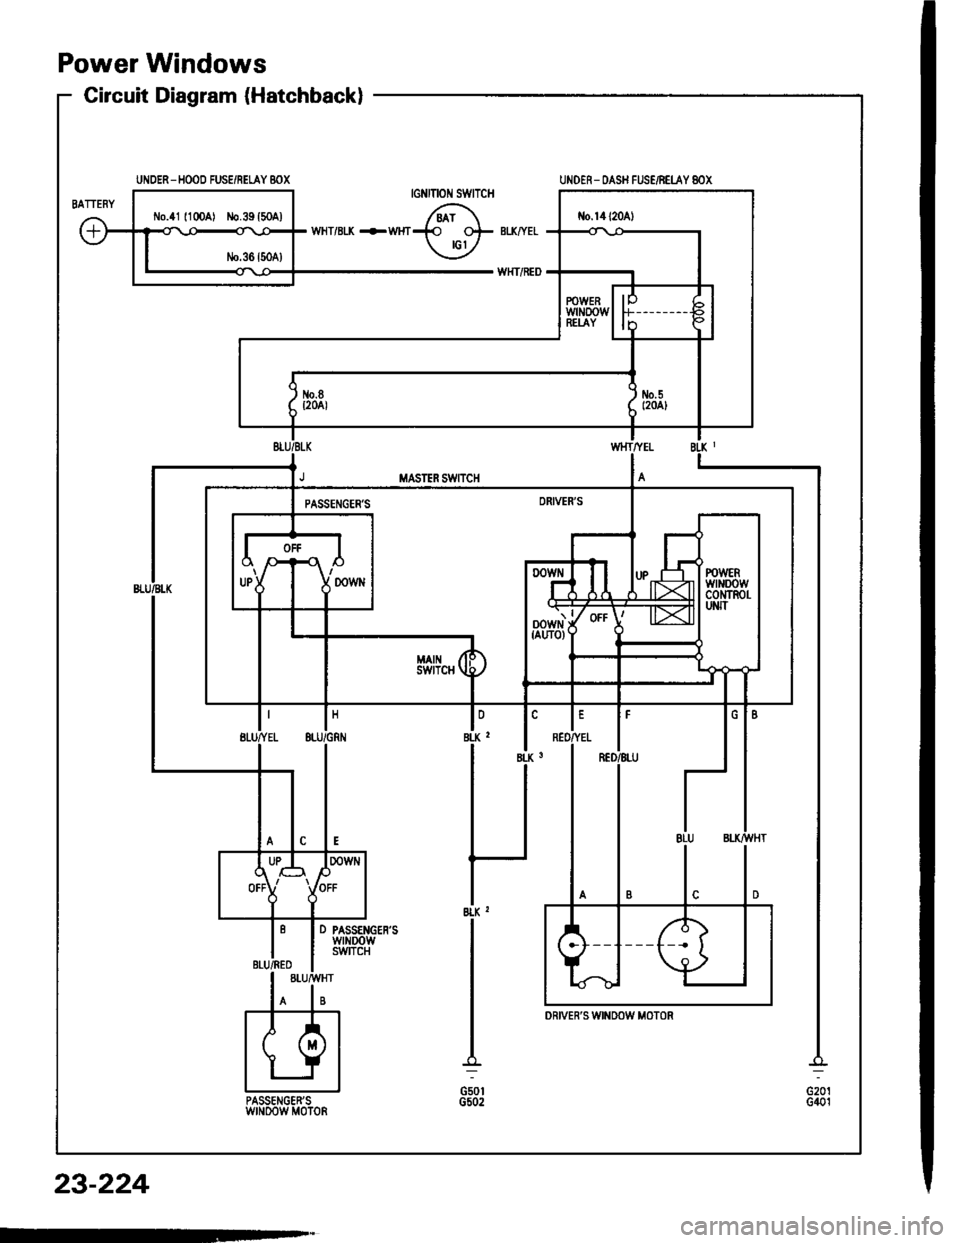 HONDA INTEGRA 1994 4.G Owners Manual Power Windows
Circuit Diagram (Hatchback)
UNDER - HOOD FUS€/REI.AY BOX
tlo.41 l100Al ilo.39 {50A)
UNOER- OASH FUSE]NEI.AY 8OX
8LX z
G50tG502
D PASSENGERSwrNDowswITcH
PASSENGENSwtN00w M0T0nG401
23-